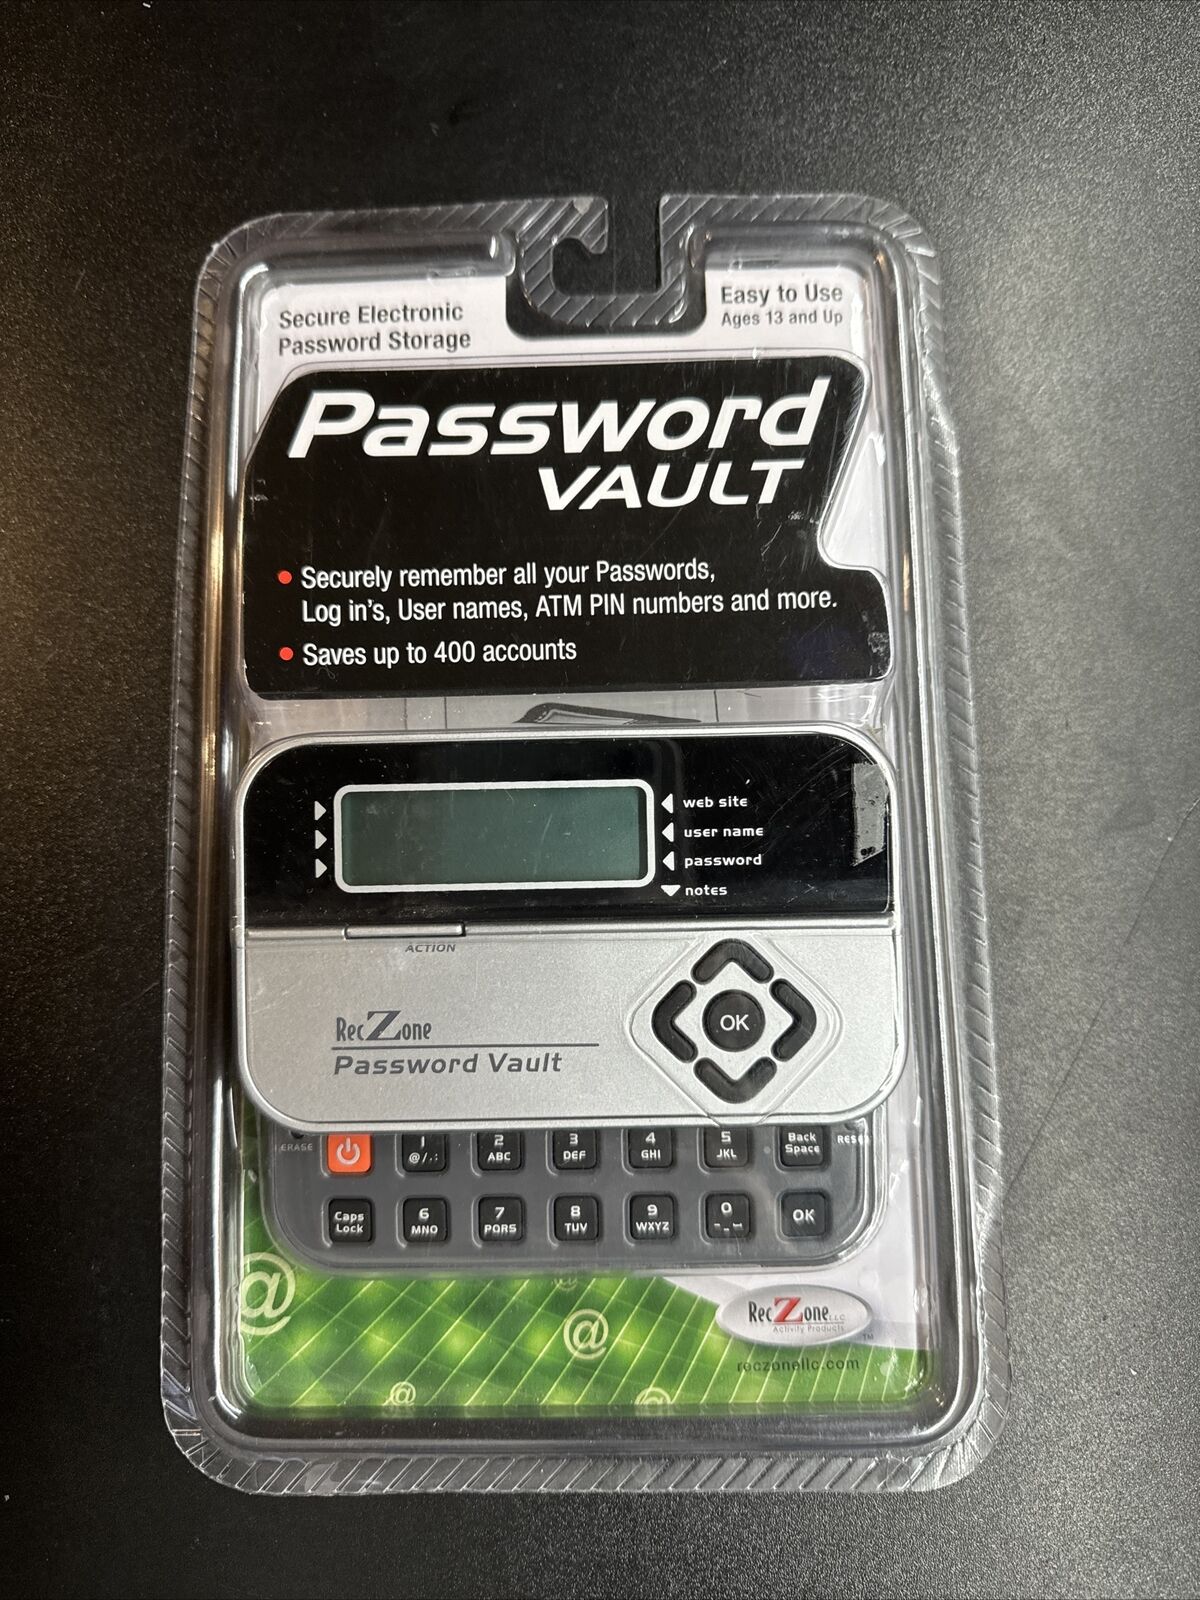 RecZone Password Vault Secure Electronic Password Storage Model 580 New